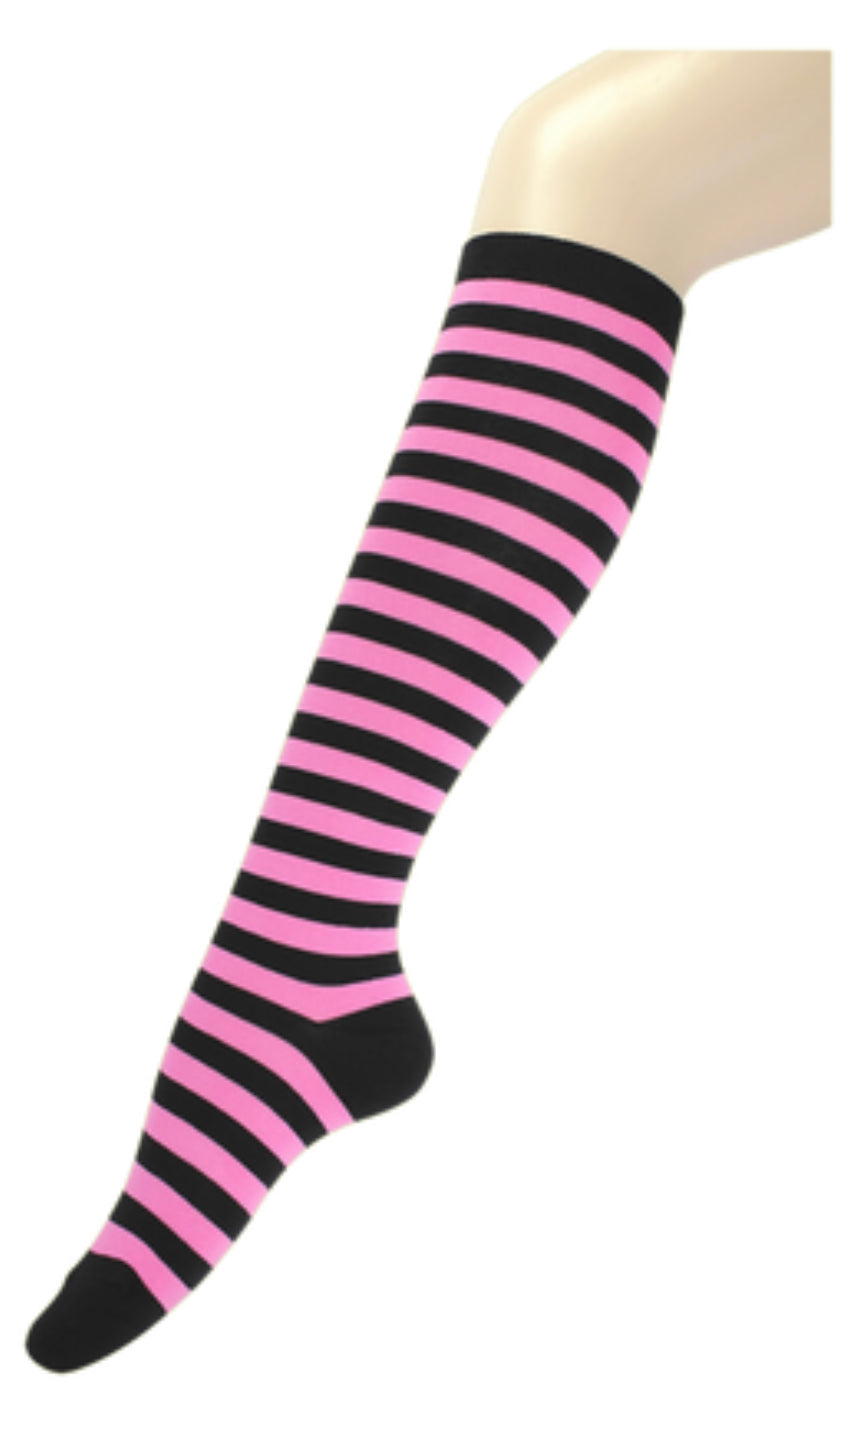 Women's Knee High socks pink and black stripe